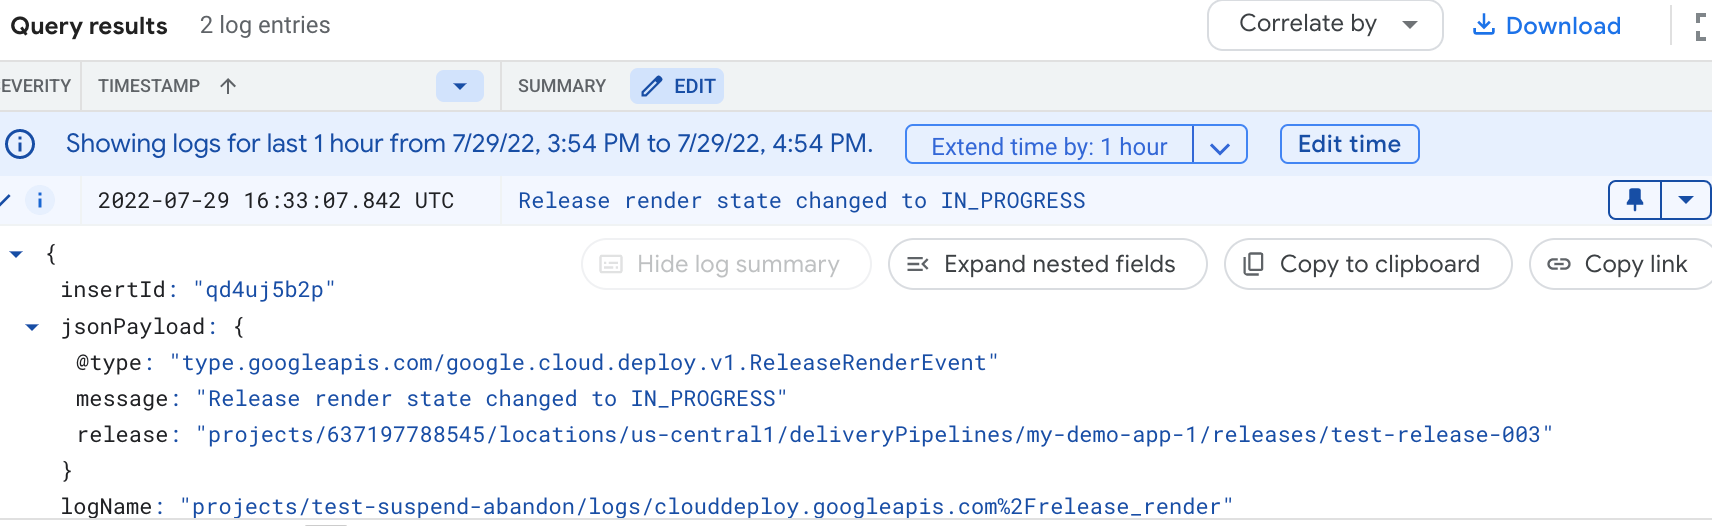 Contents of a
Google Cloud Deploy platform log